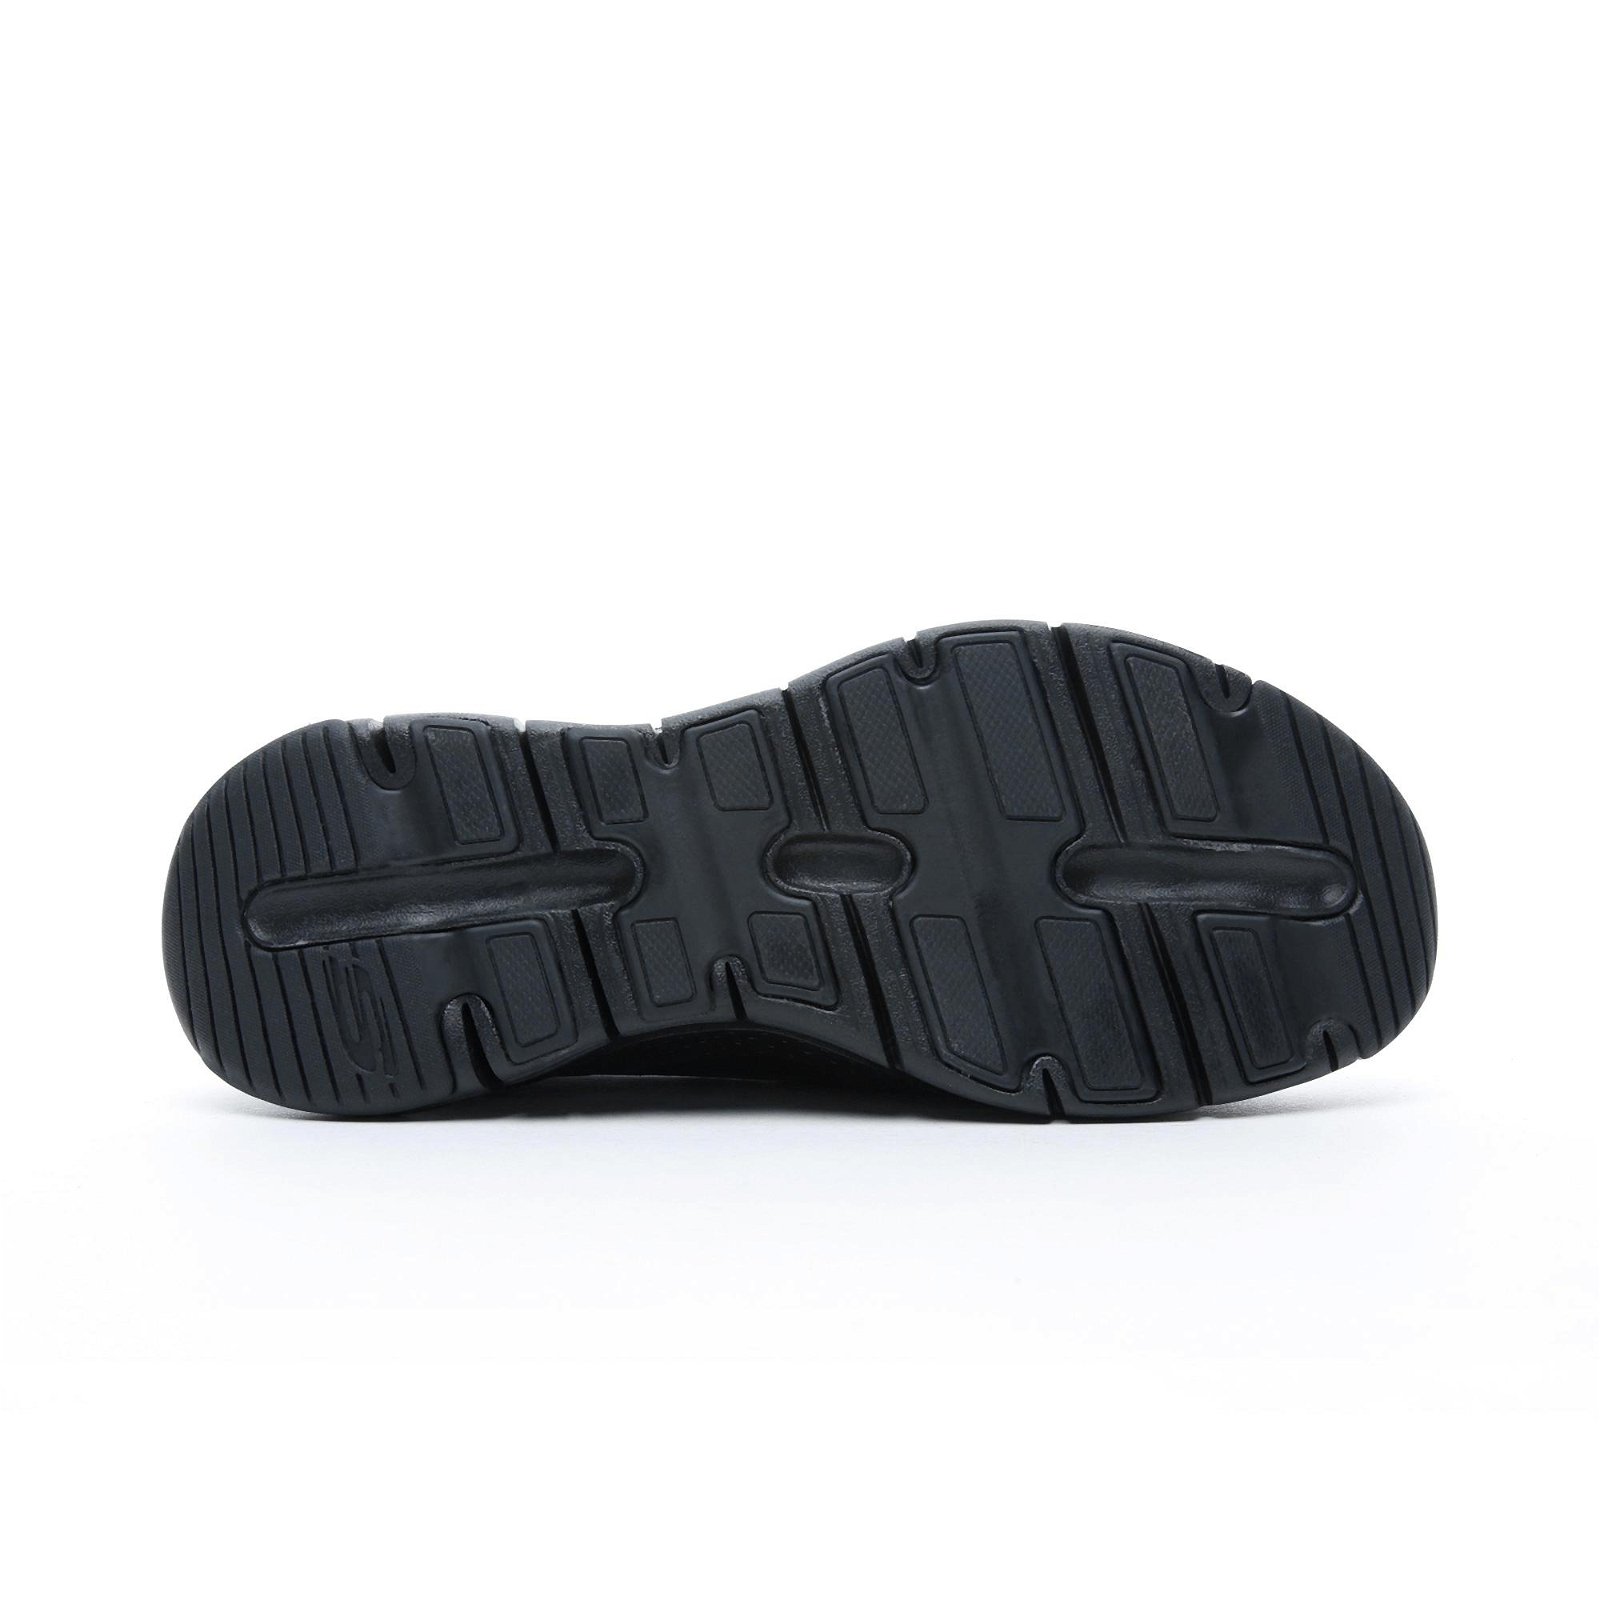 Skechers Arch Fit-Banlin Siyah Spor Ayakkabı